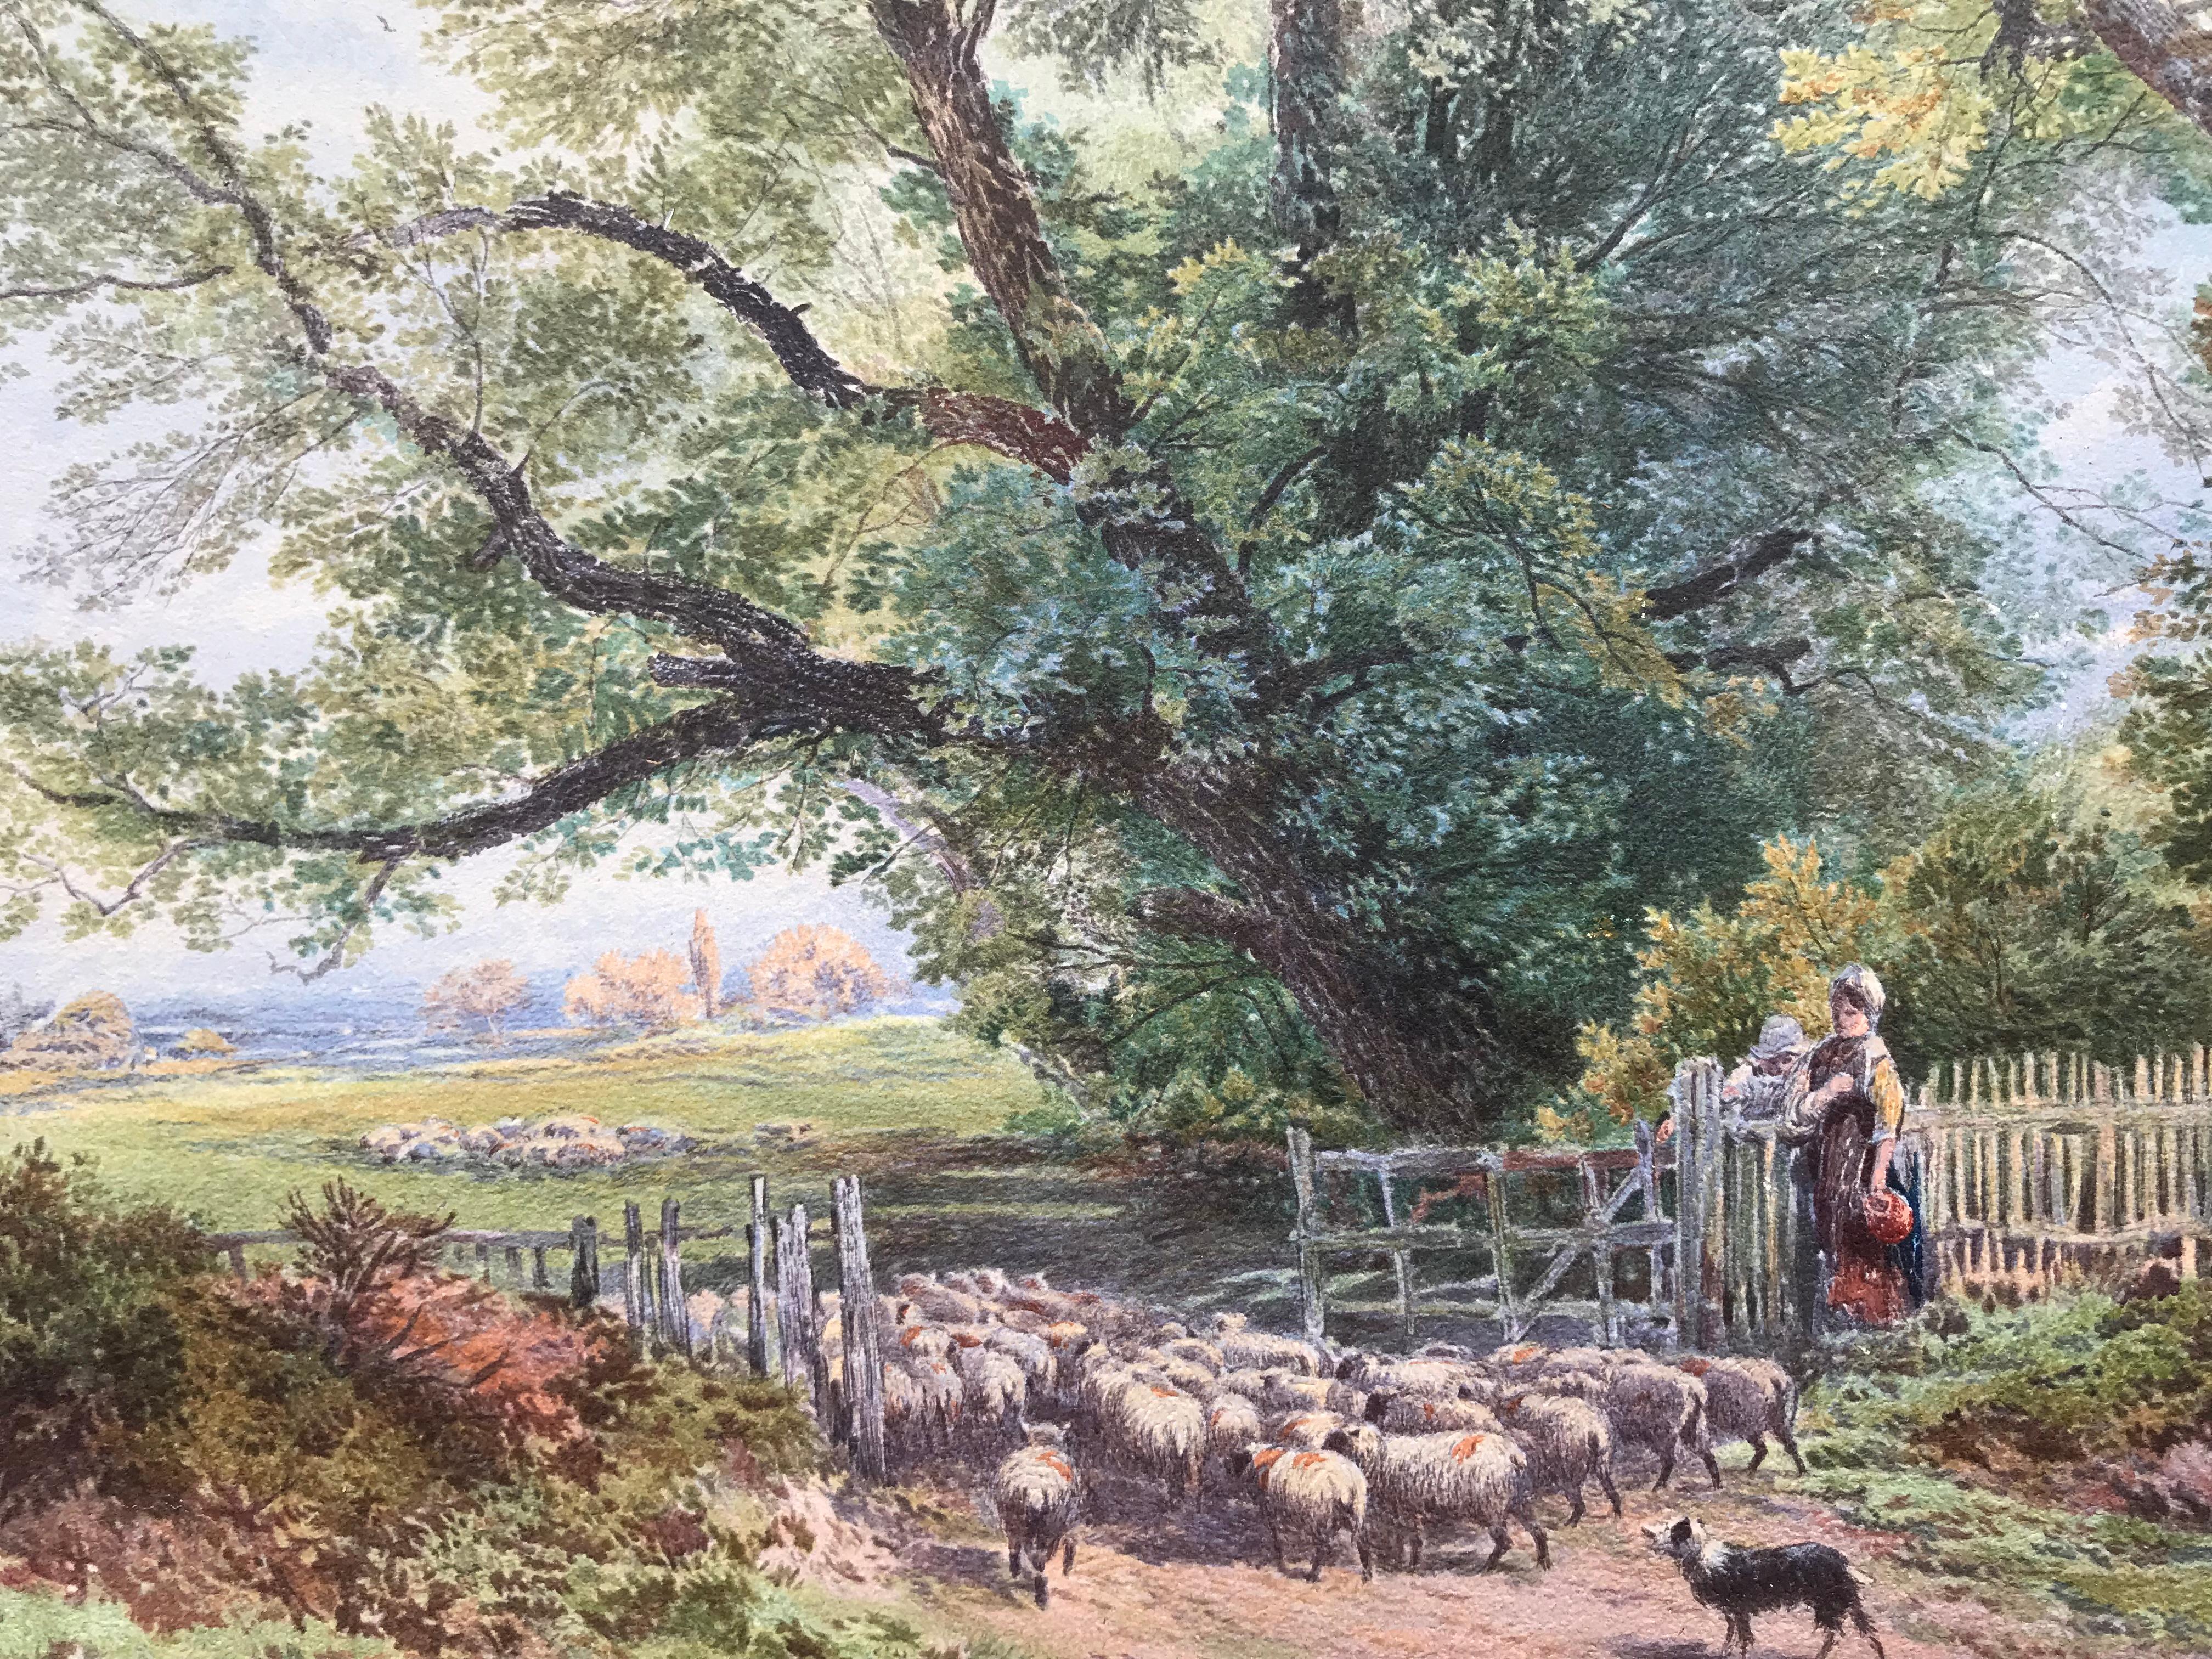 “Tending the Sheep” - Print by Myles Birket Foster